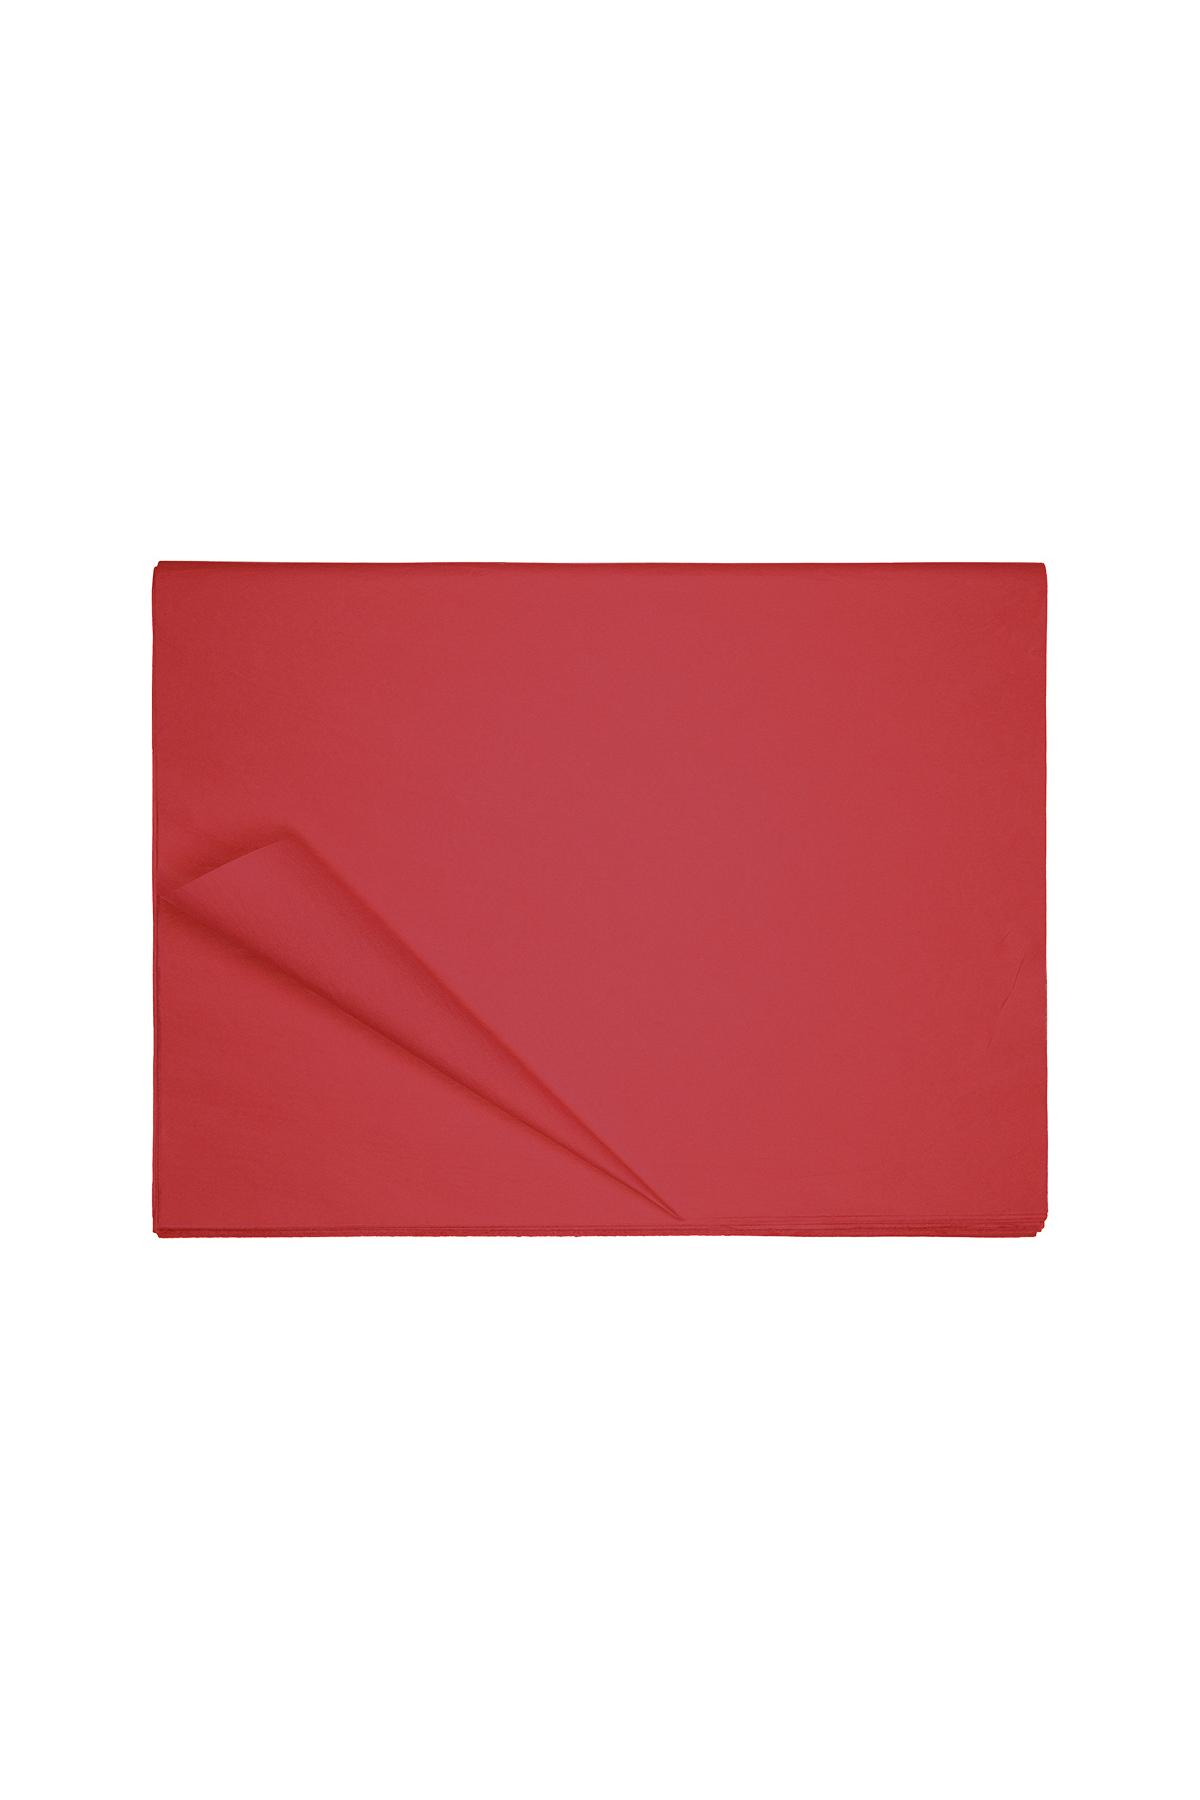 Papel secante - Papel rojo 